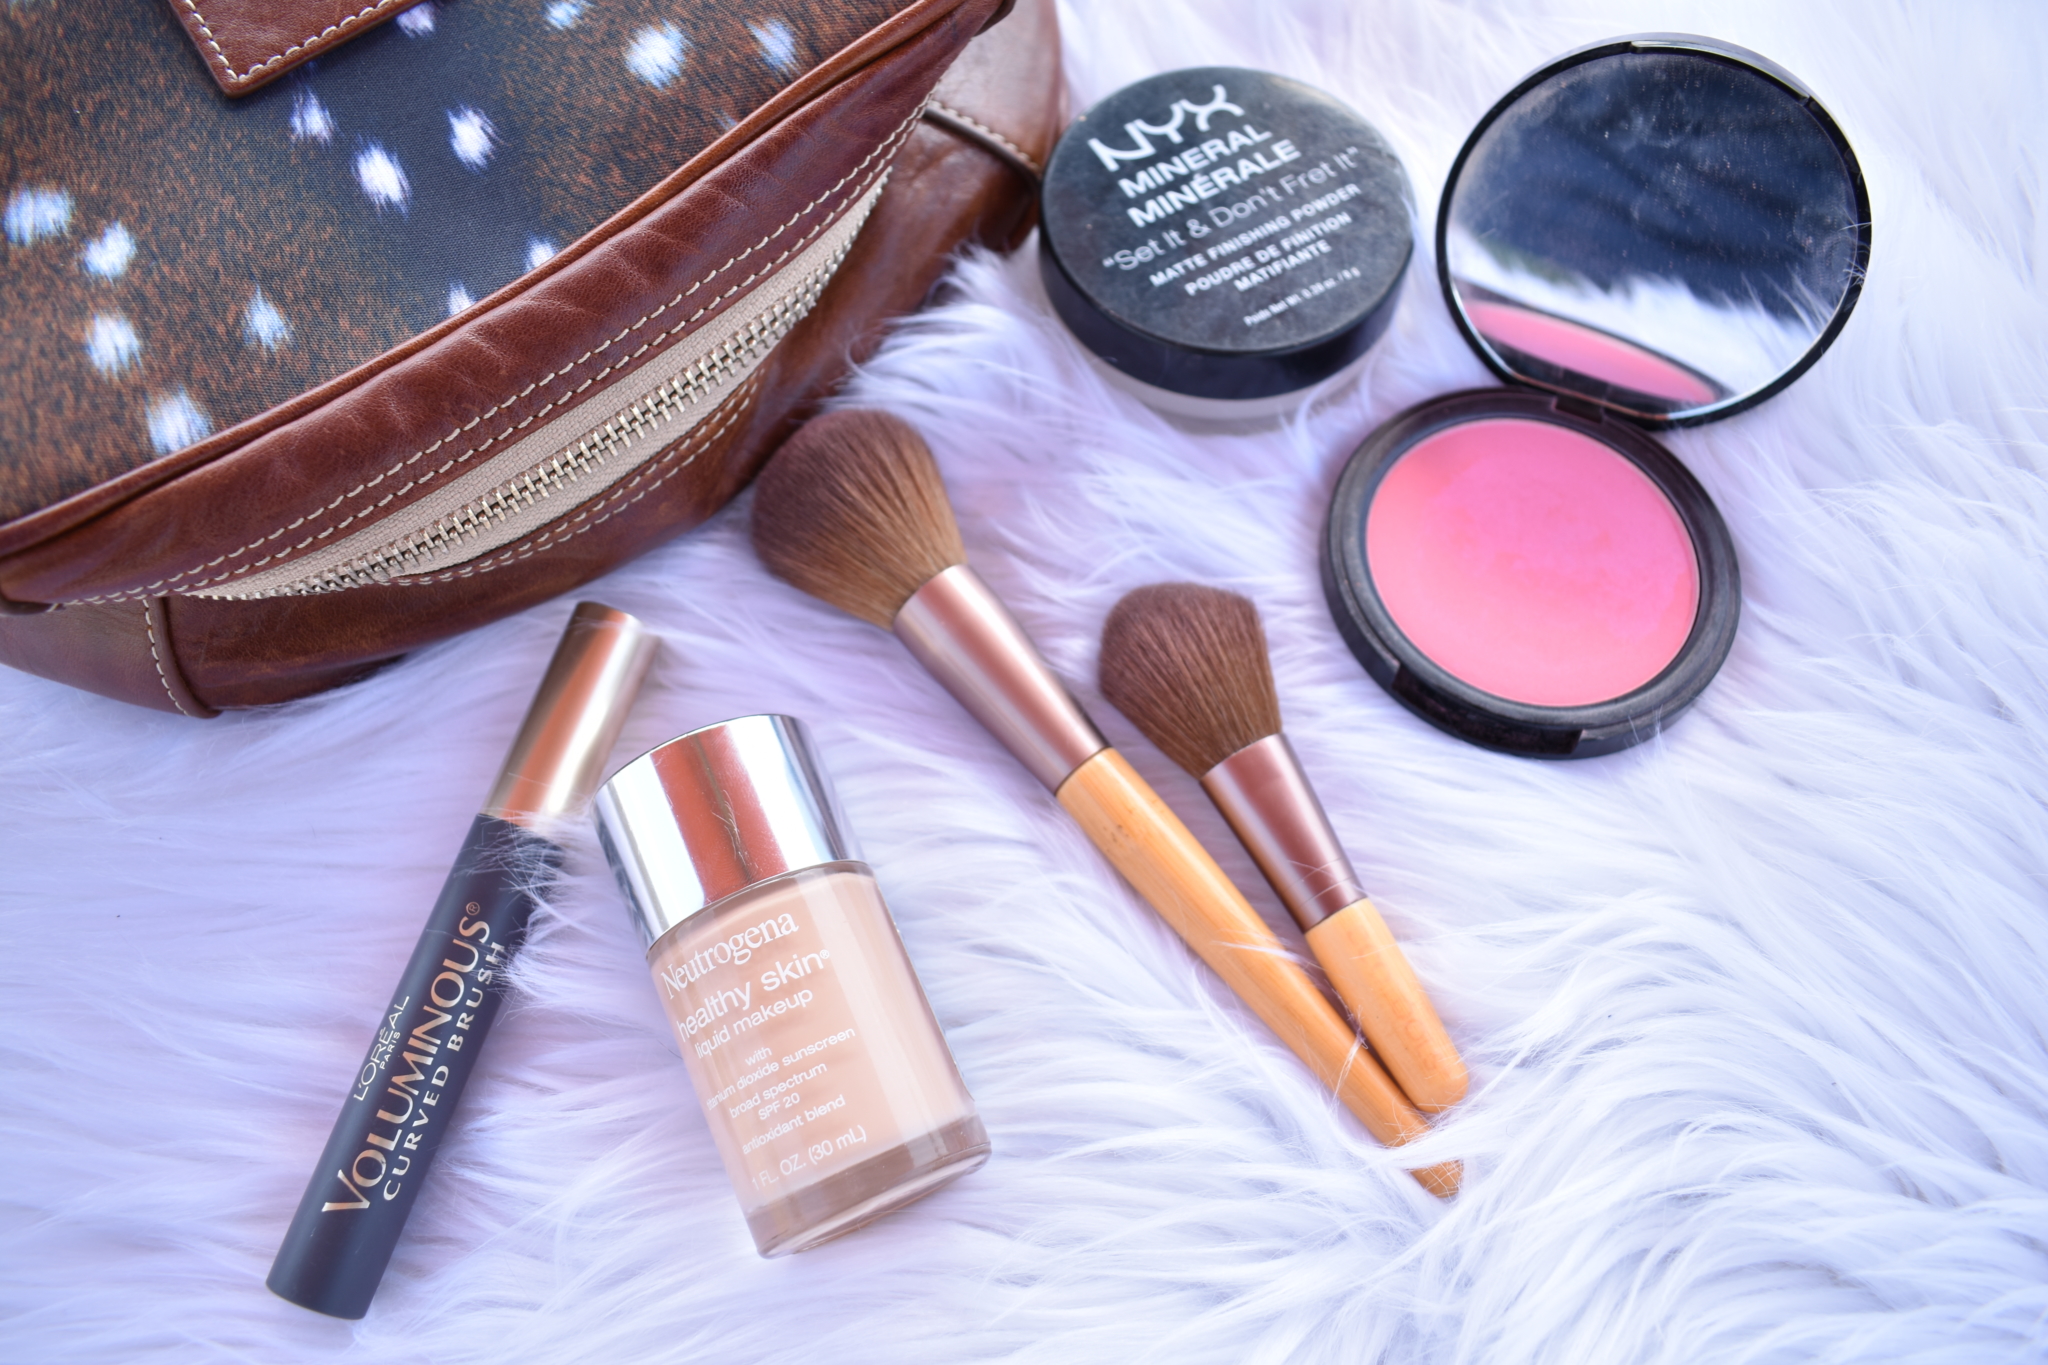 makeup bag, Loreal mascara, makeup brushes, neutrogena foundation, nyx blush and mineral powder